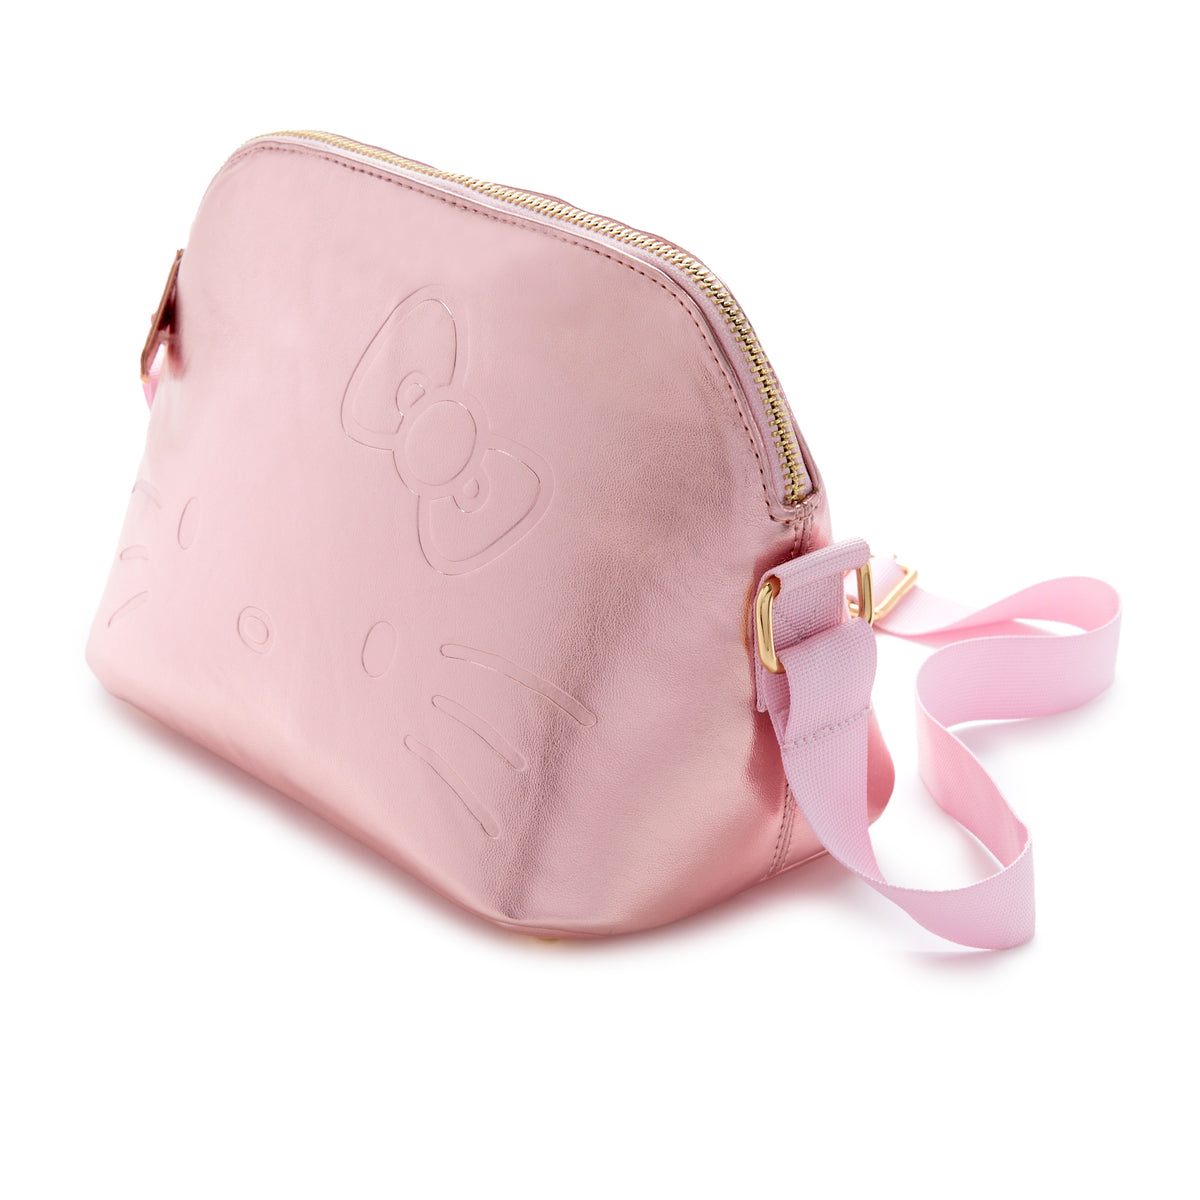 Hello Kitty Embossed Leather Handbags